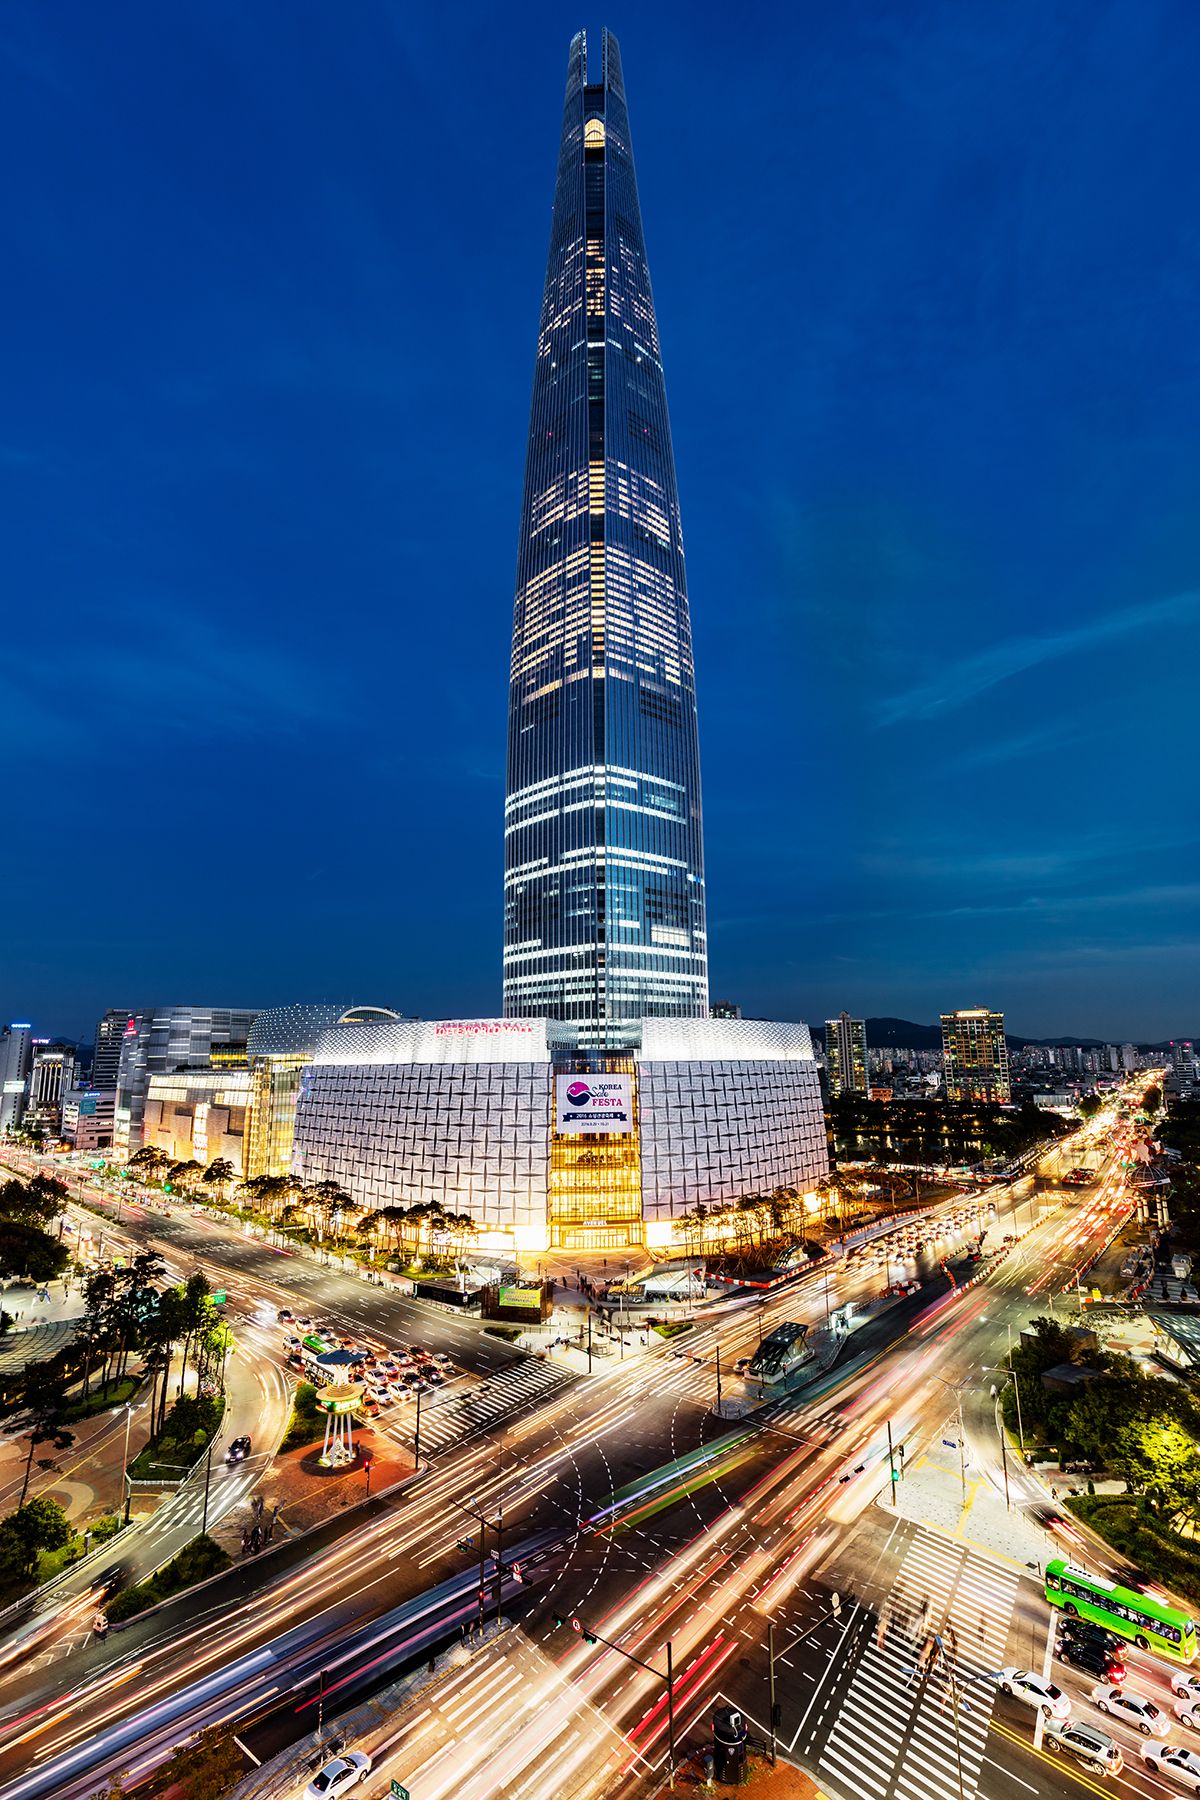 Lotte world tower, Seoul, South Korea